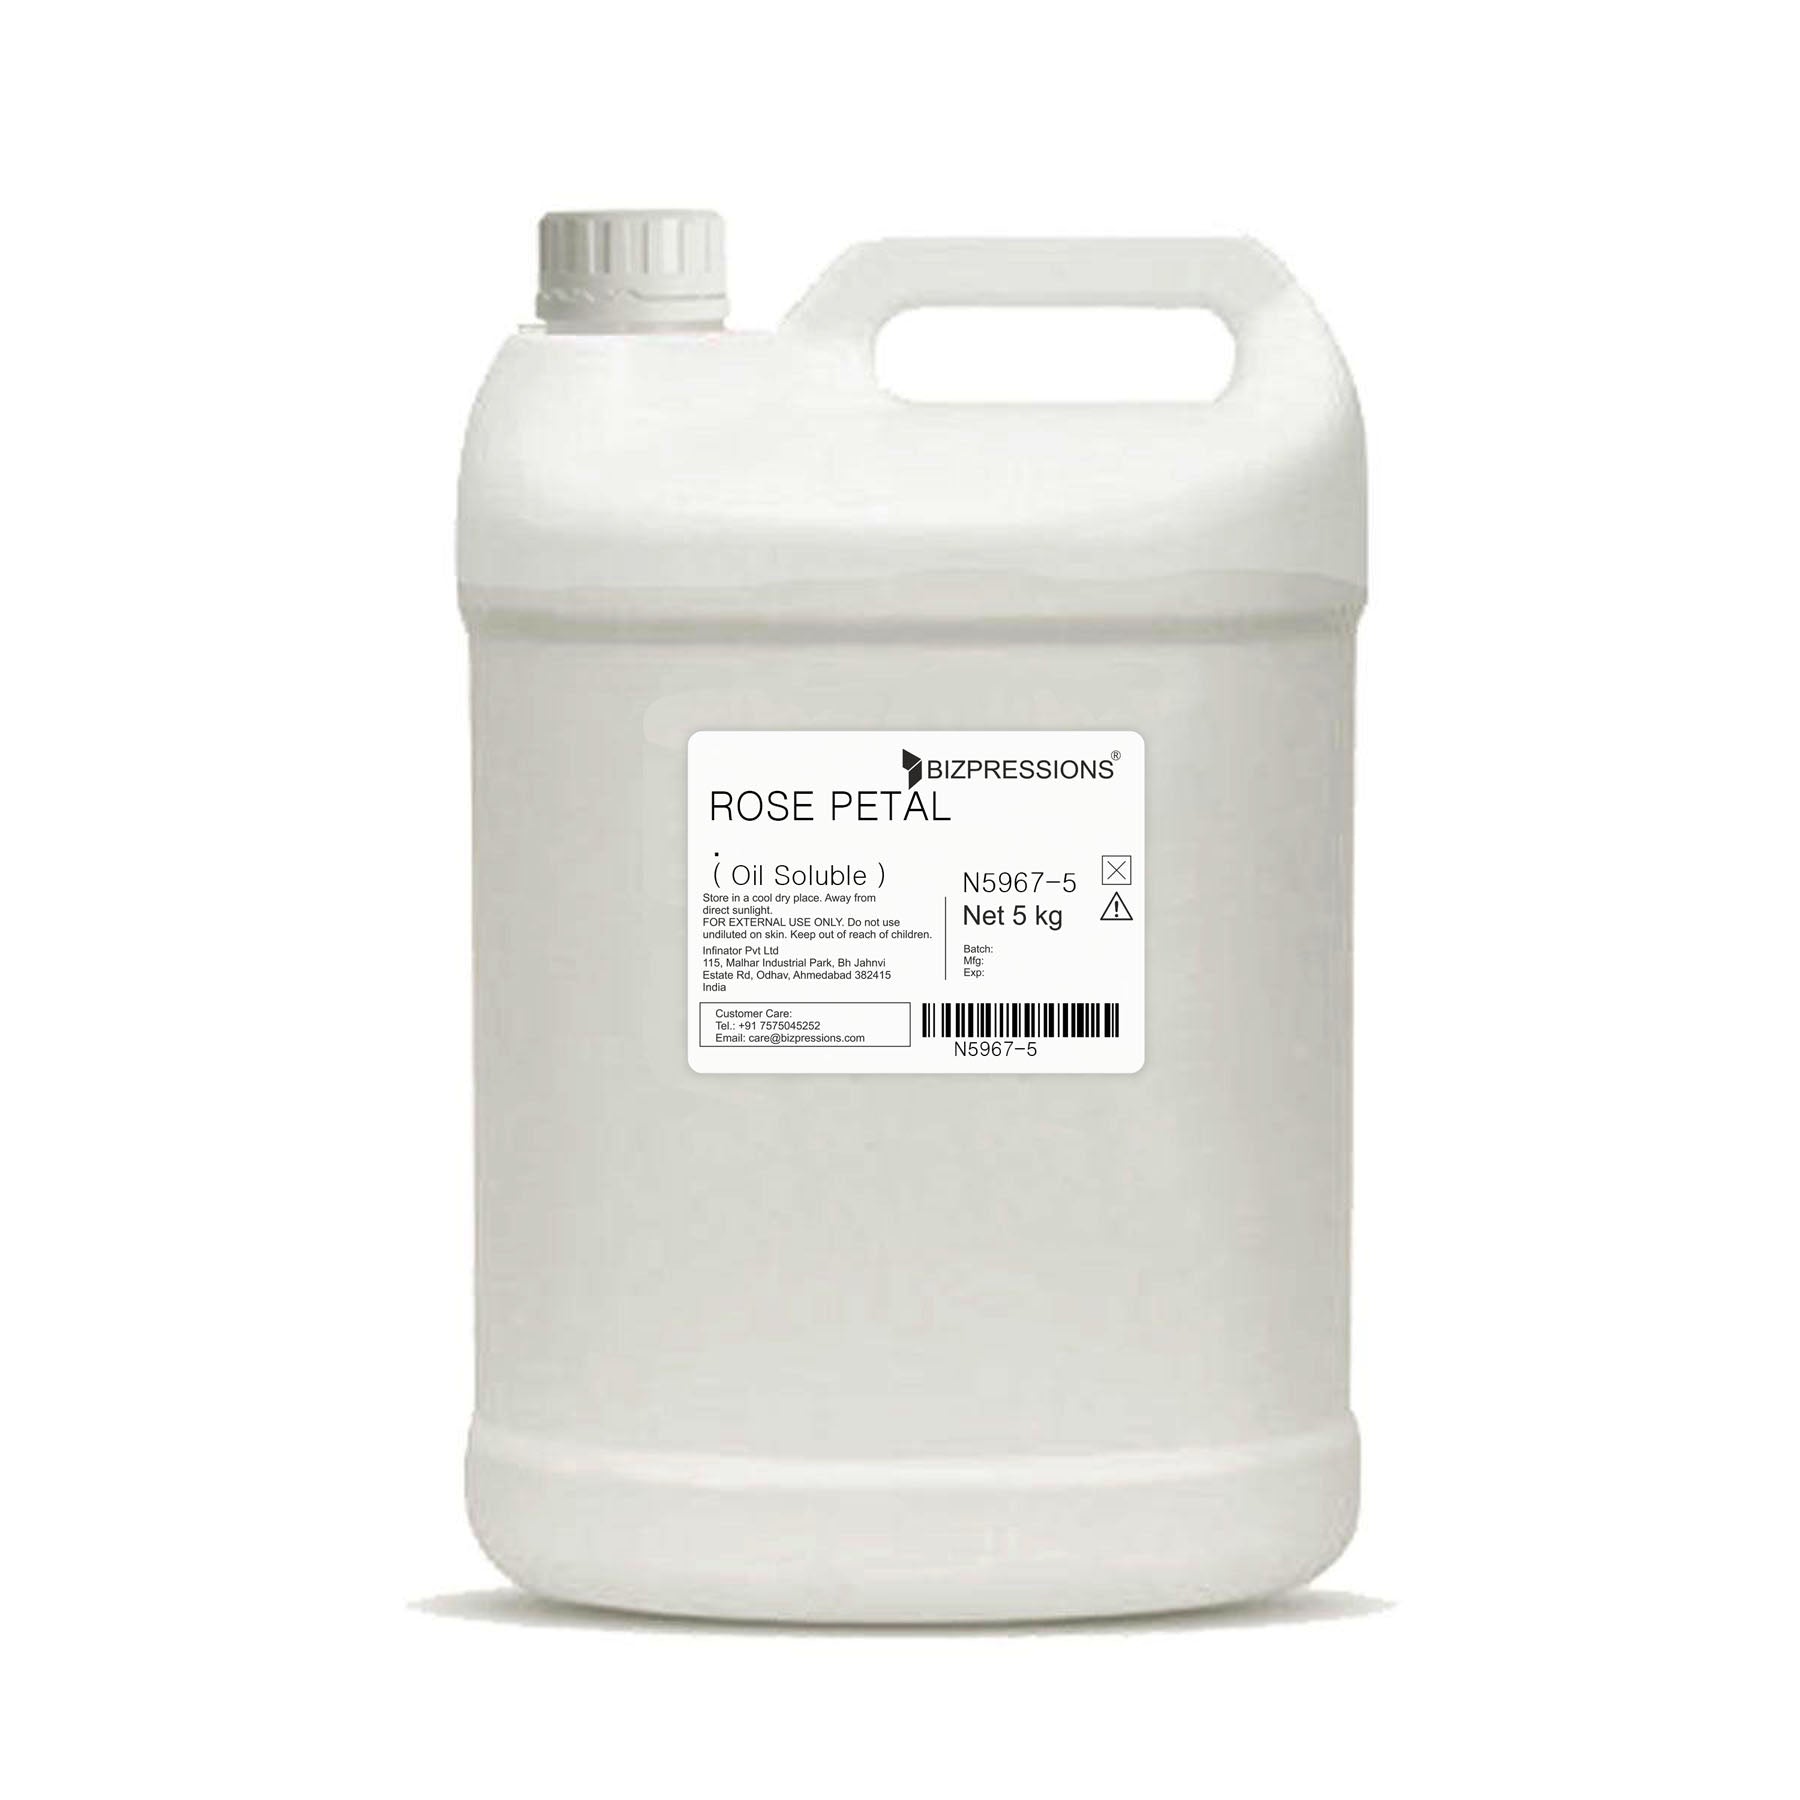 ROSE PETAL - Fragrance ( Oil Soluble ) - 5 kg